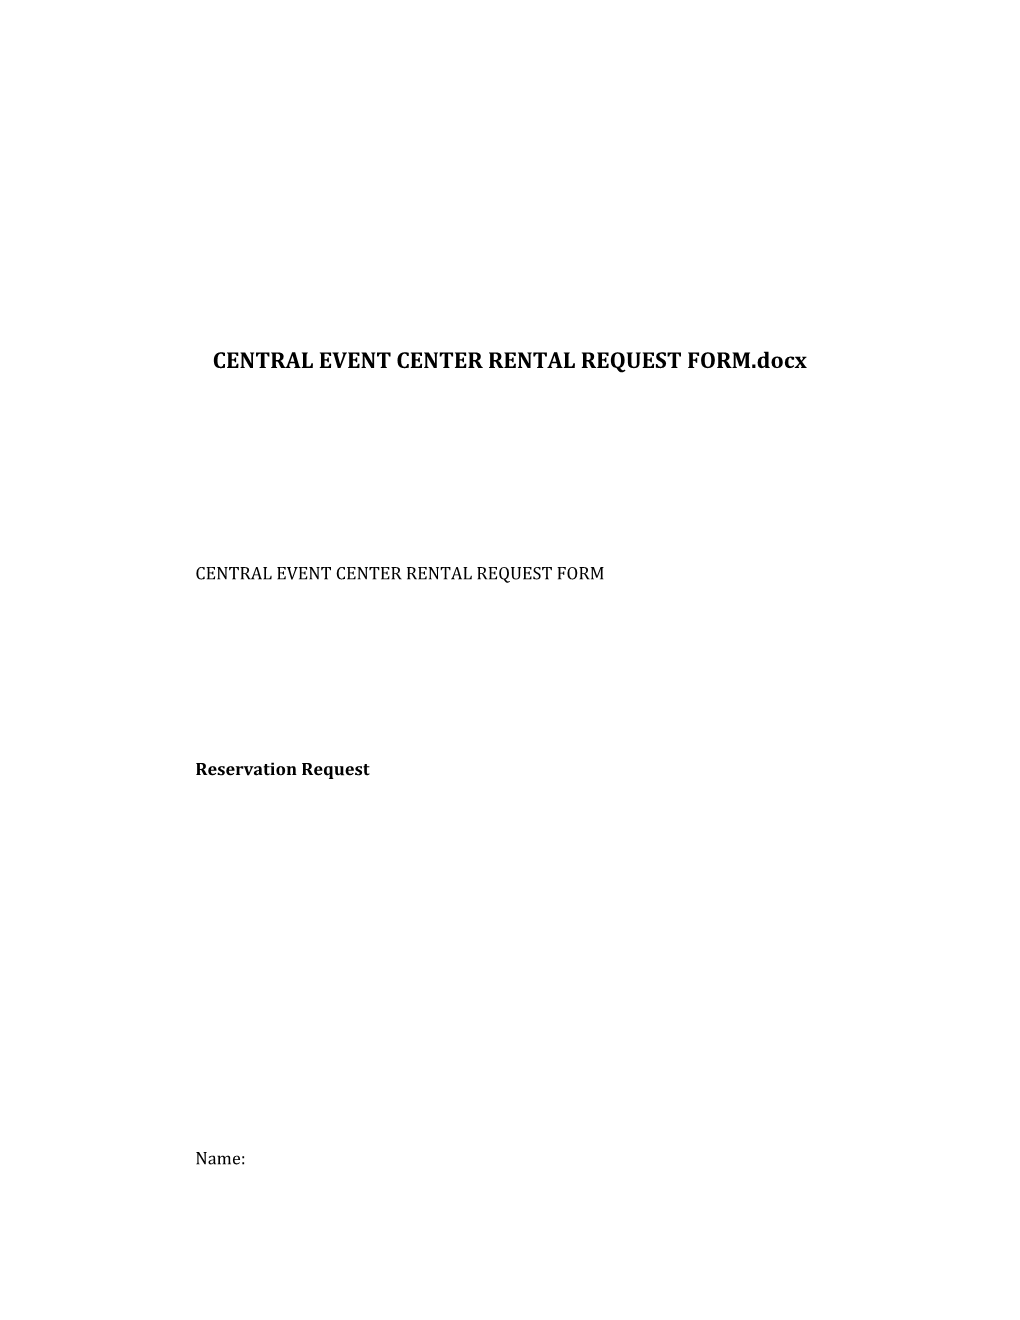 Central Event Center Rental Request Form